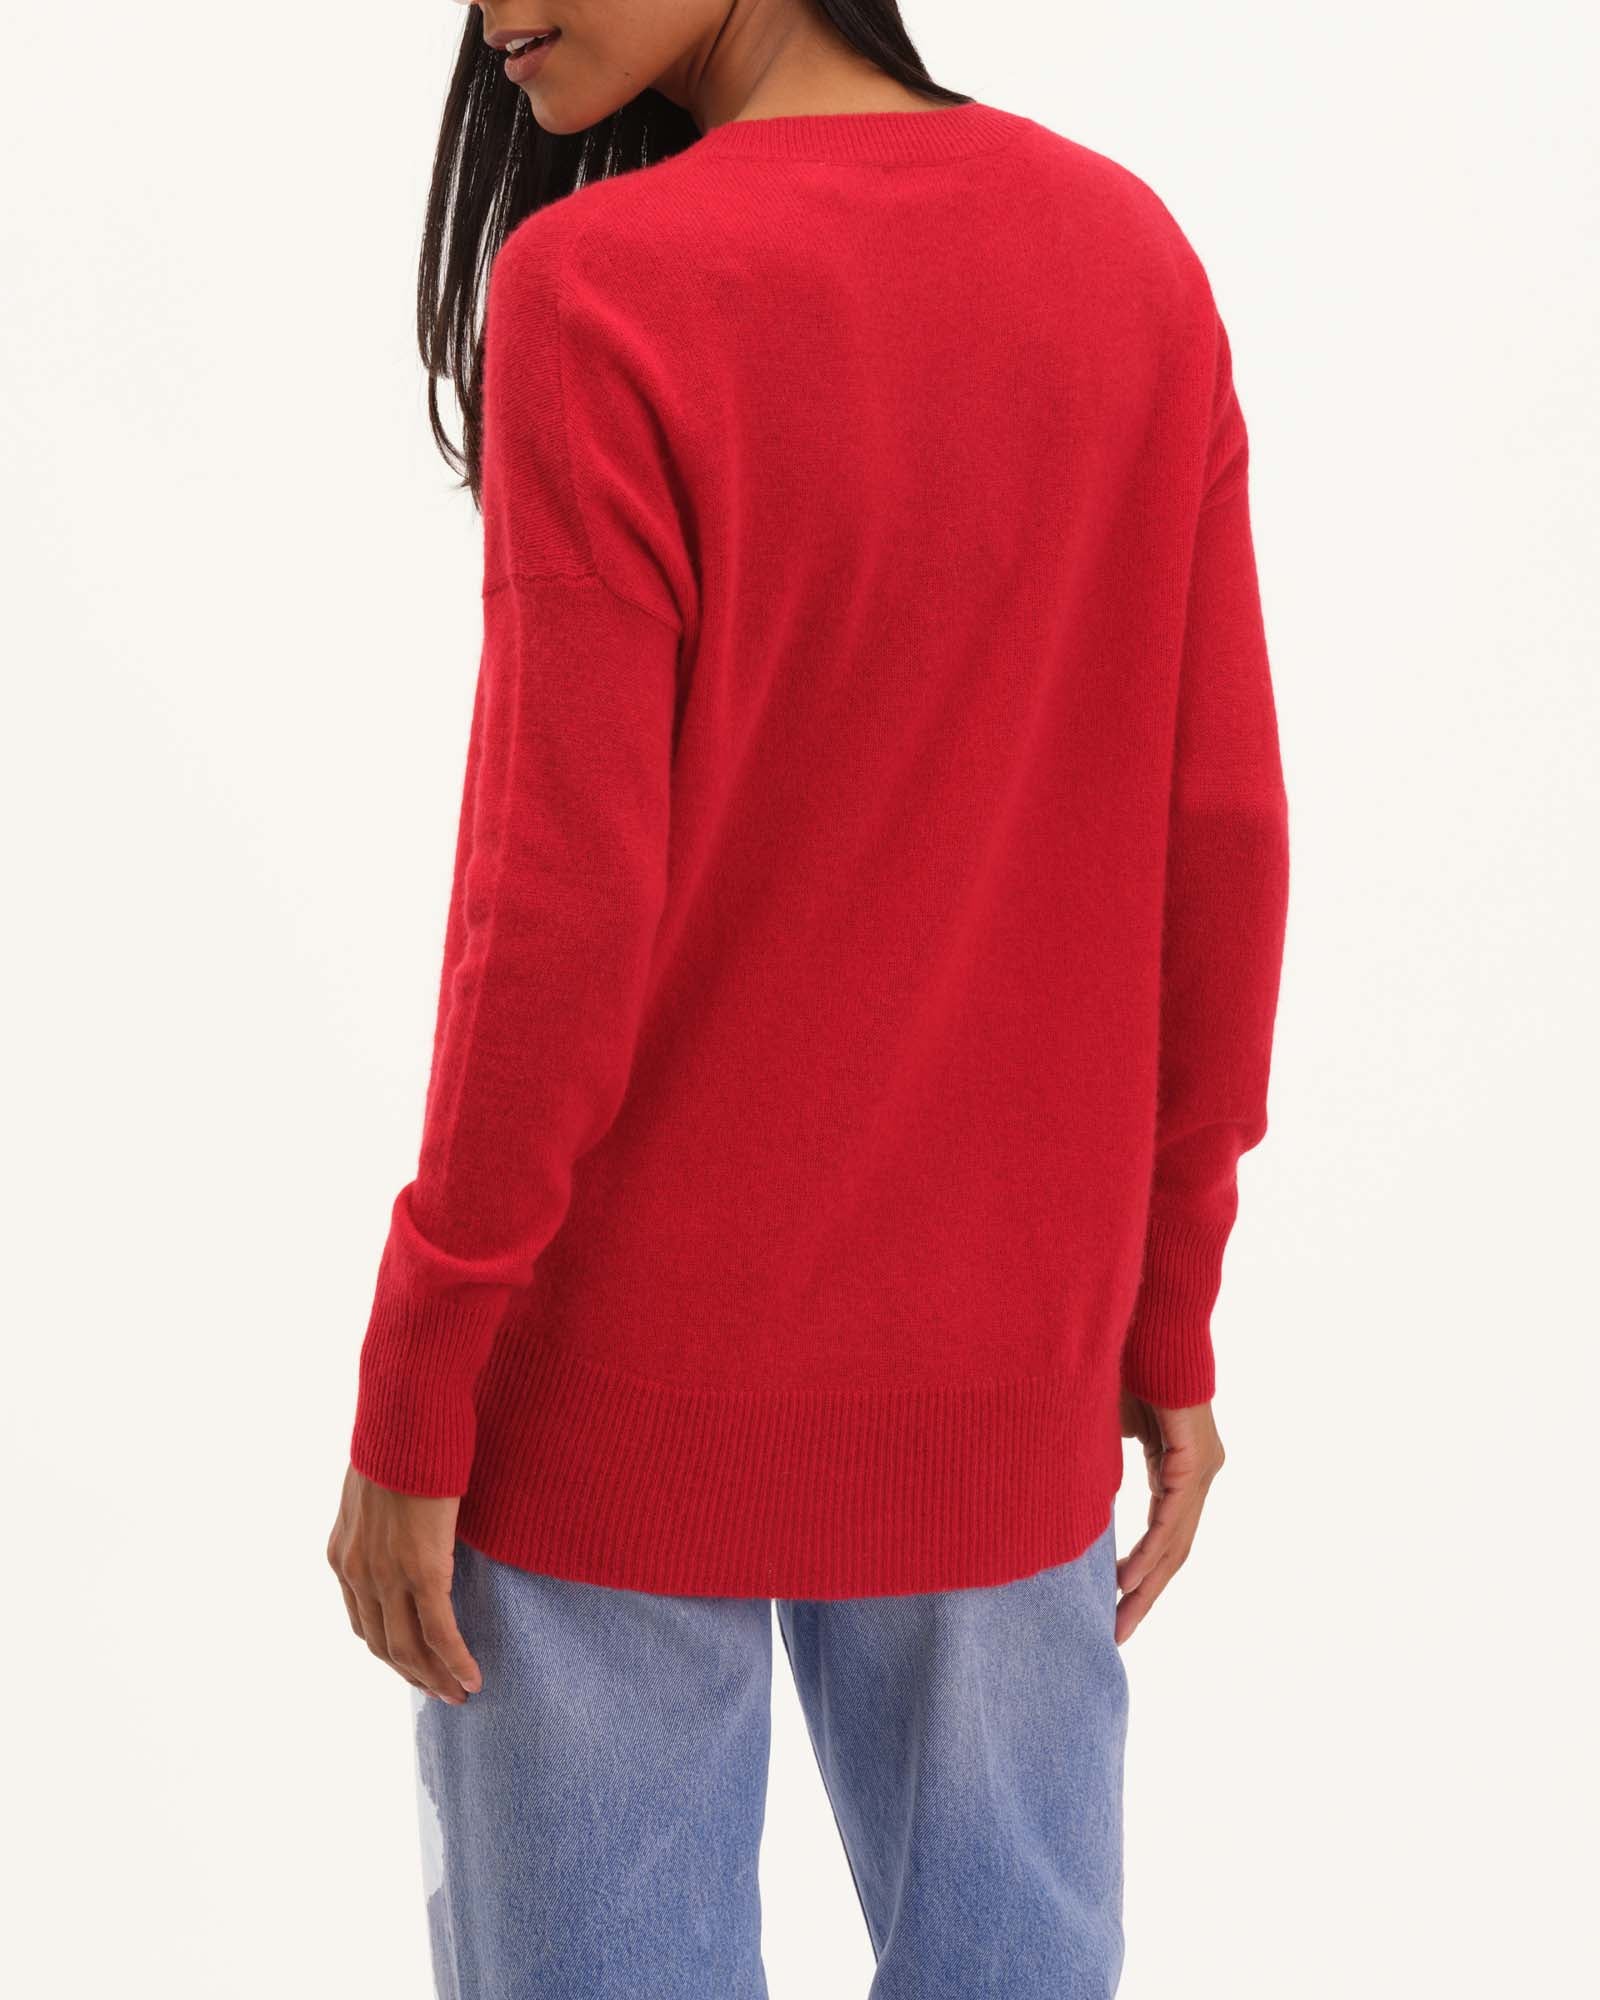 Shop Classic Cashmere Crewneck Sweater | T Tahari | JANE + MERCER